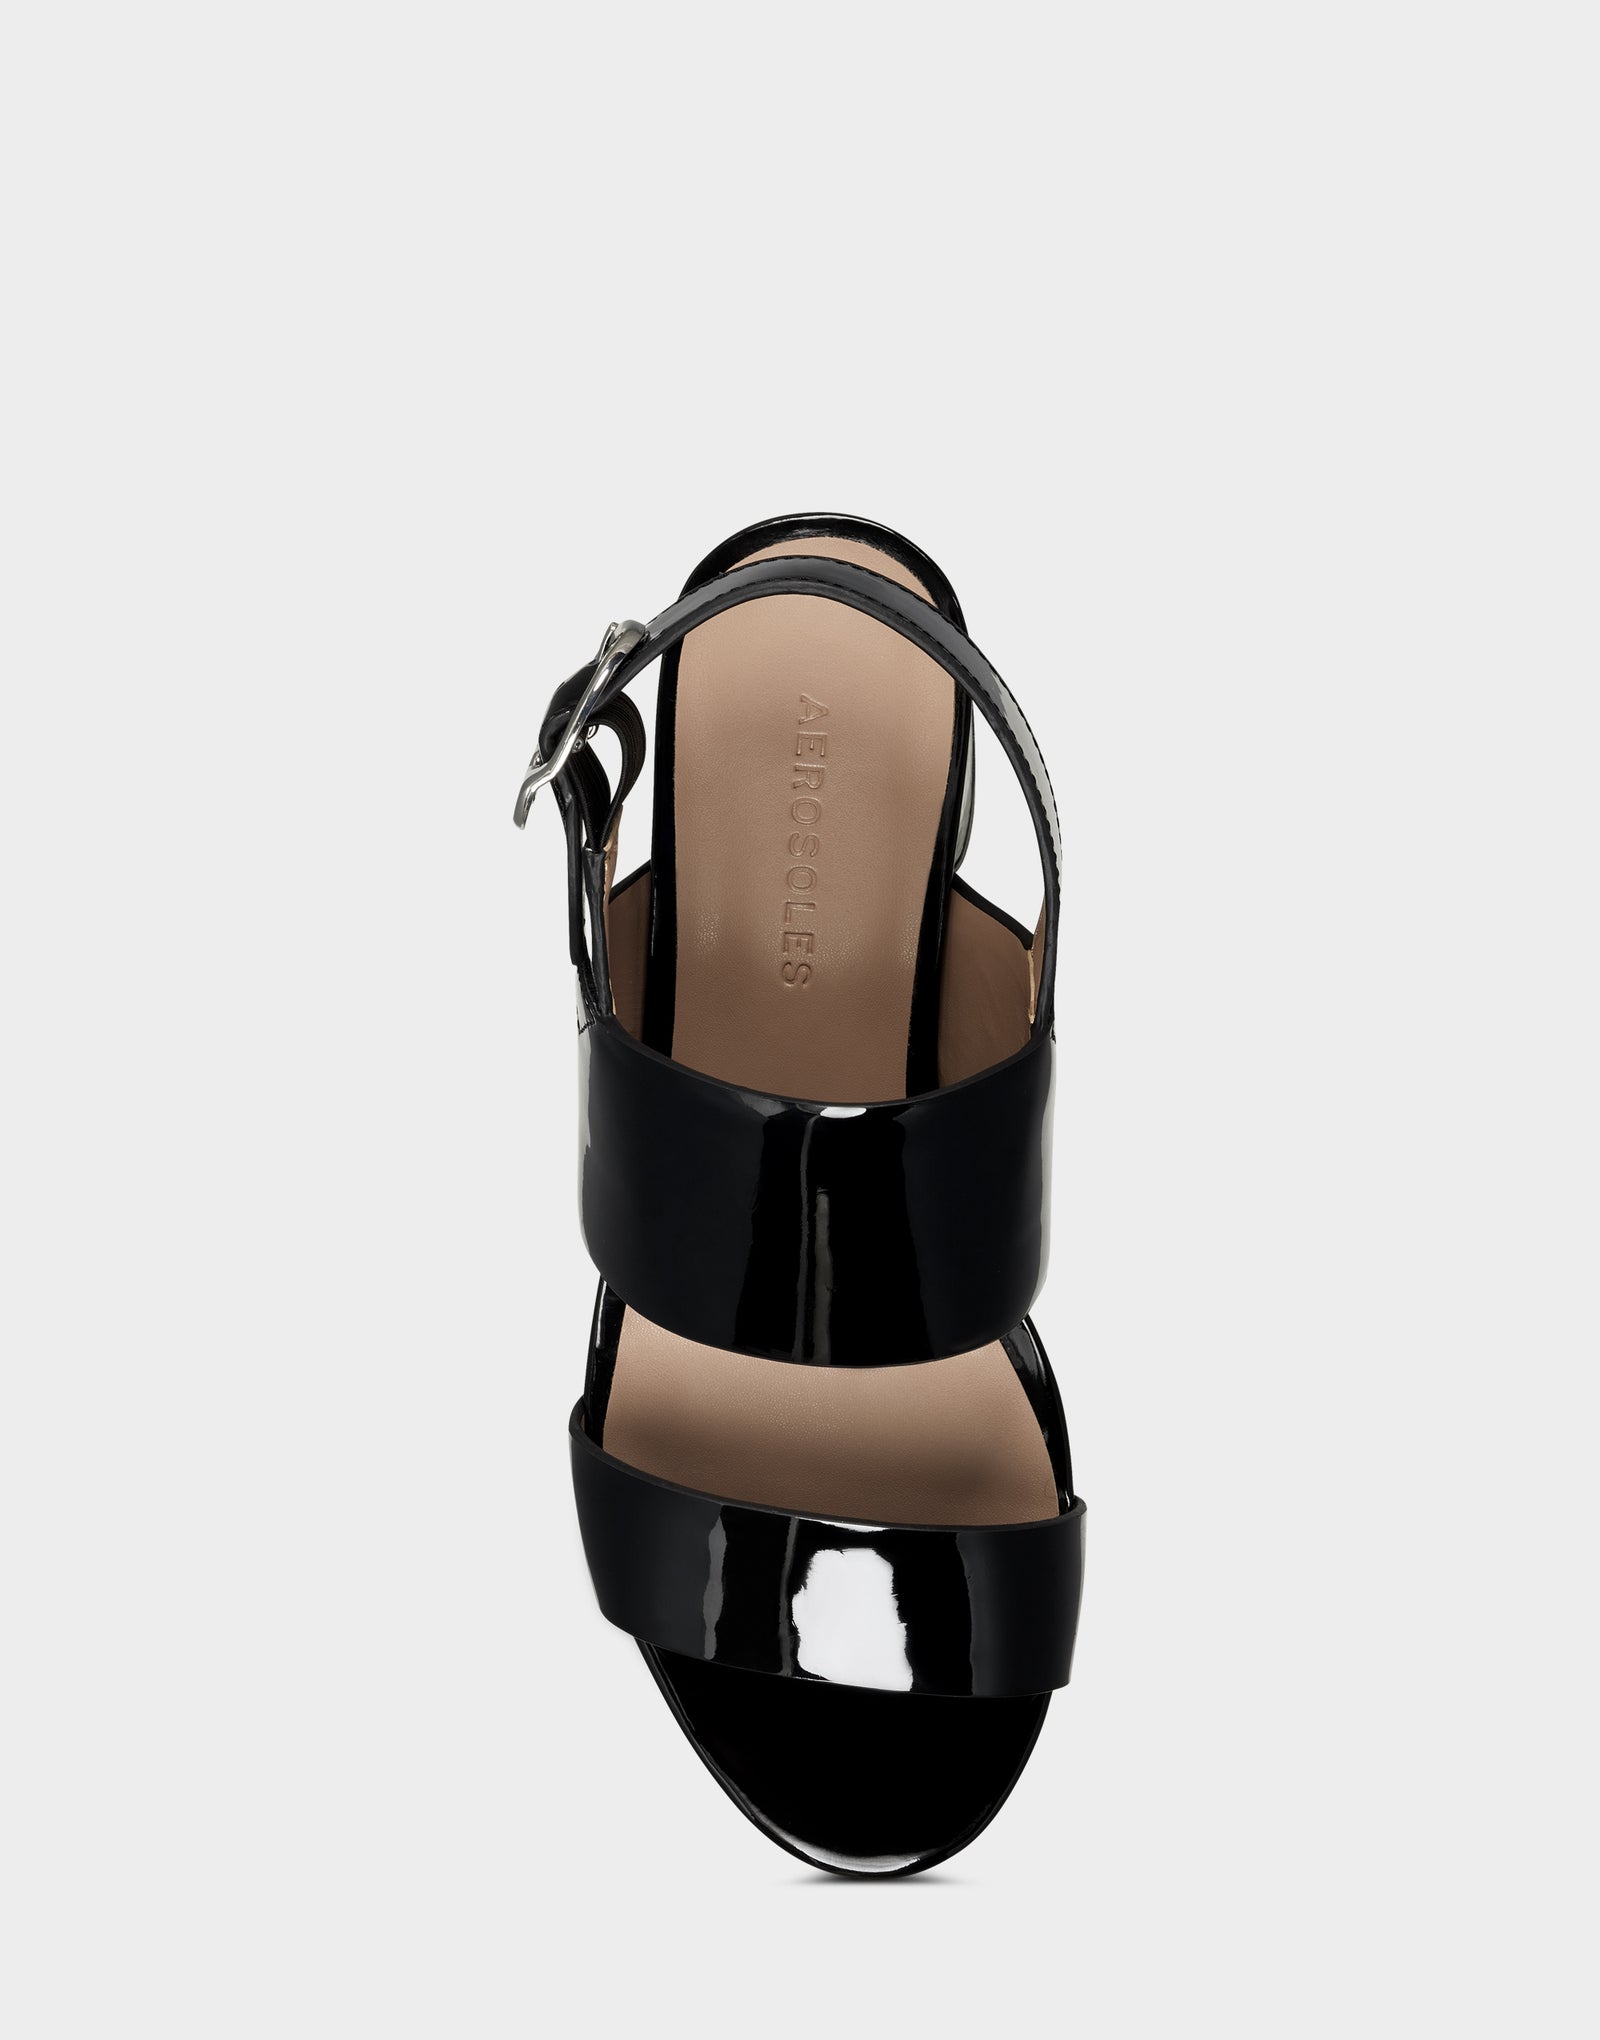 Women's Platform Sandal in Black Patent Faux Leather